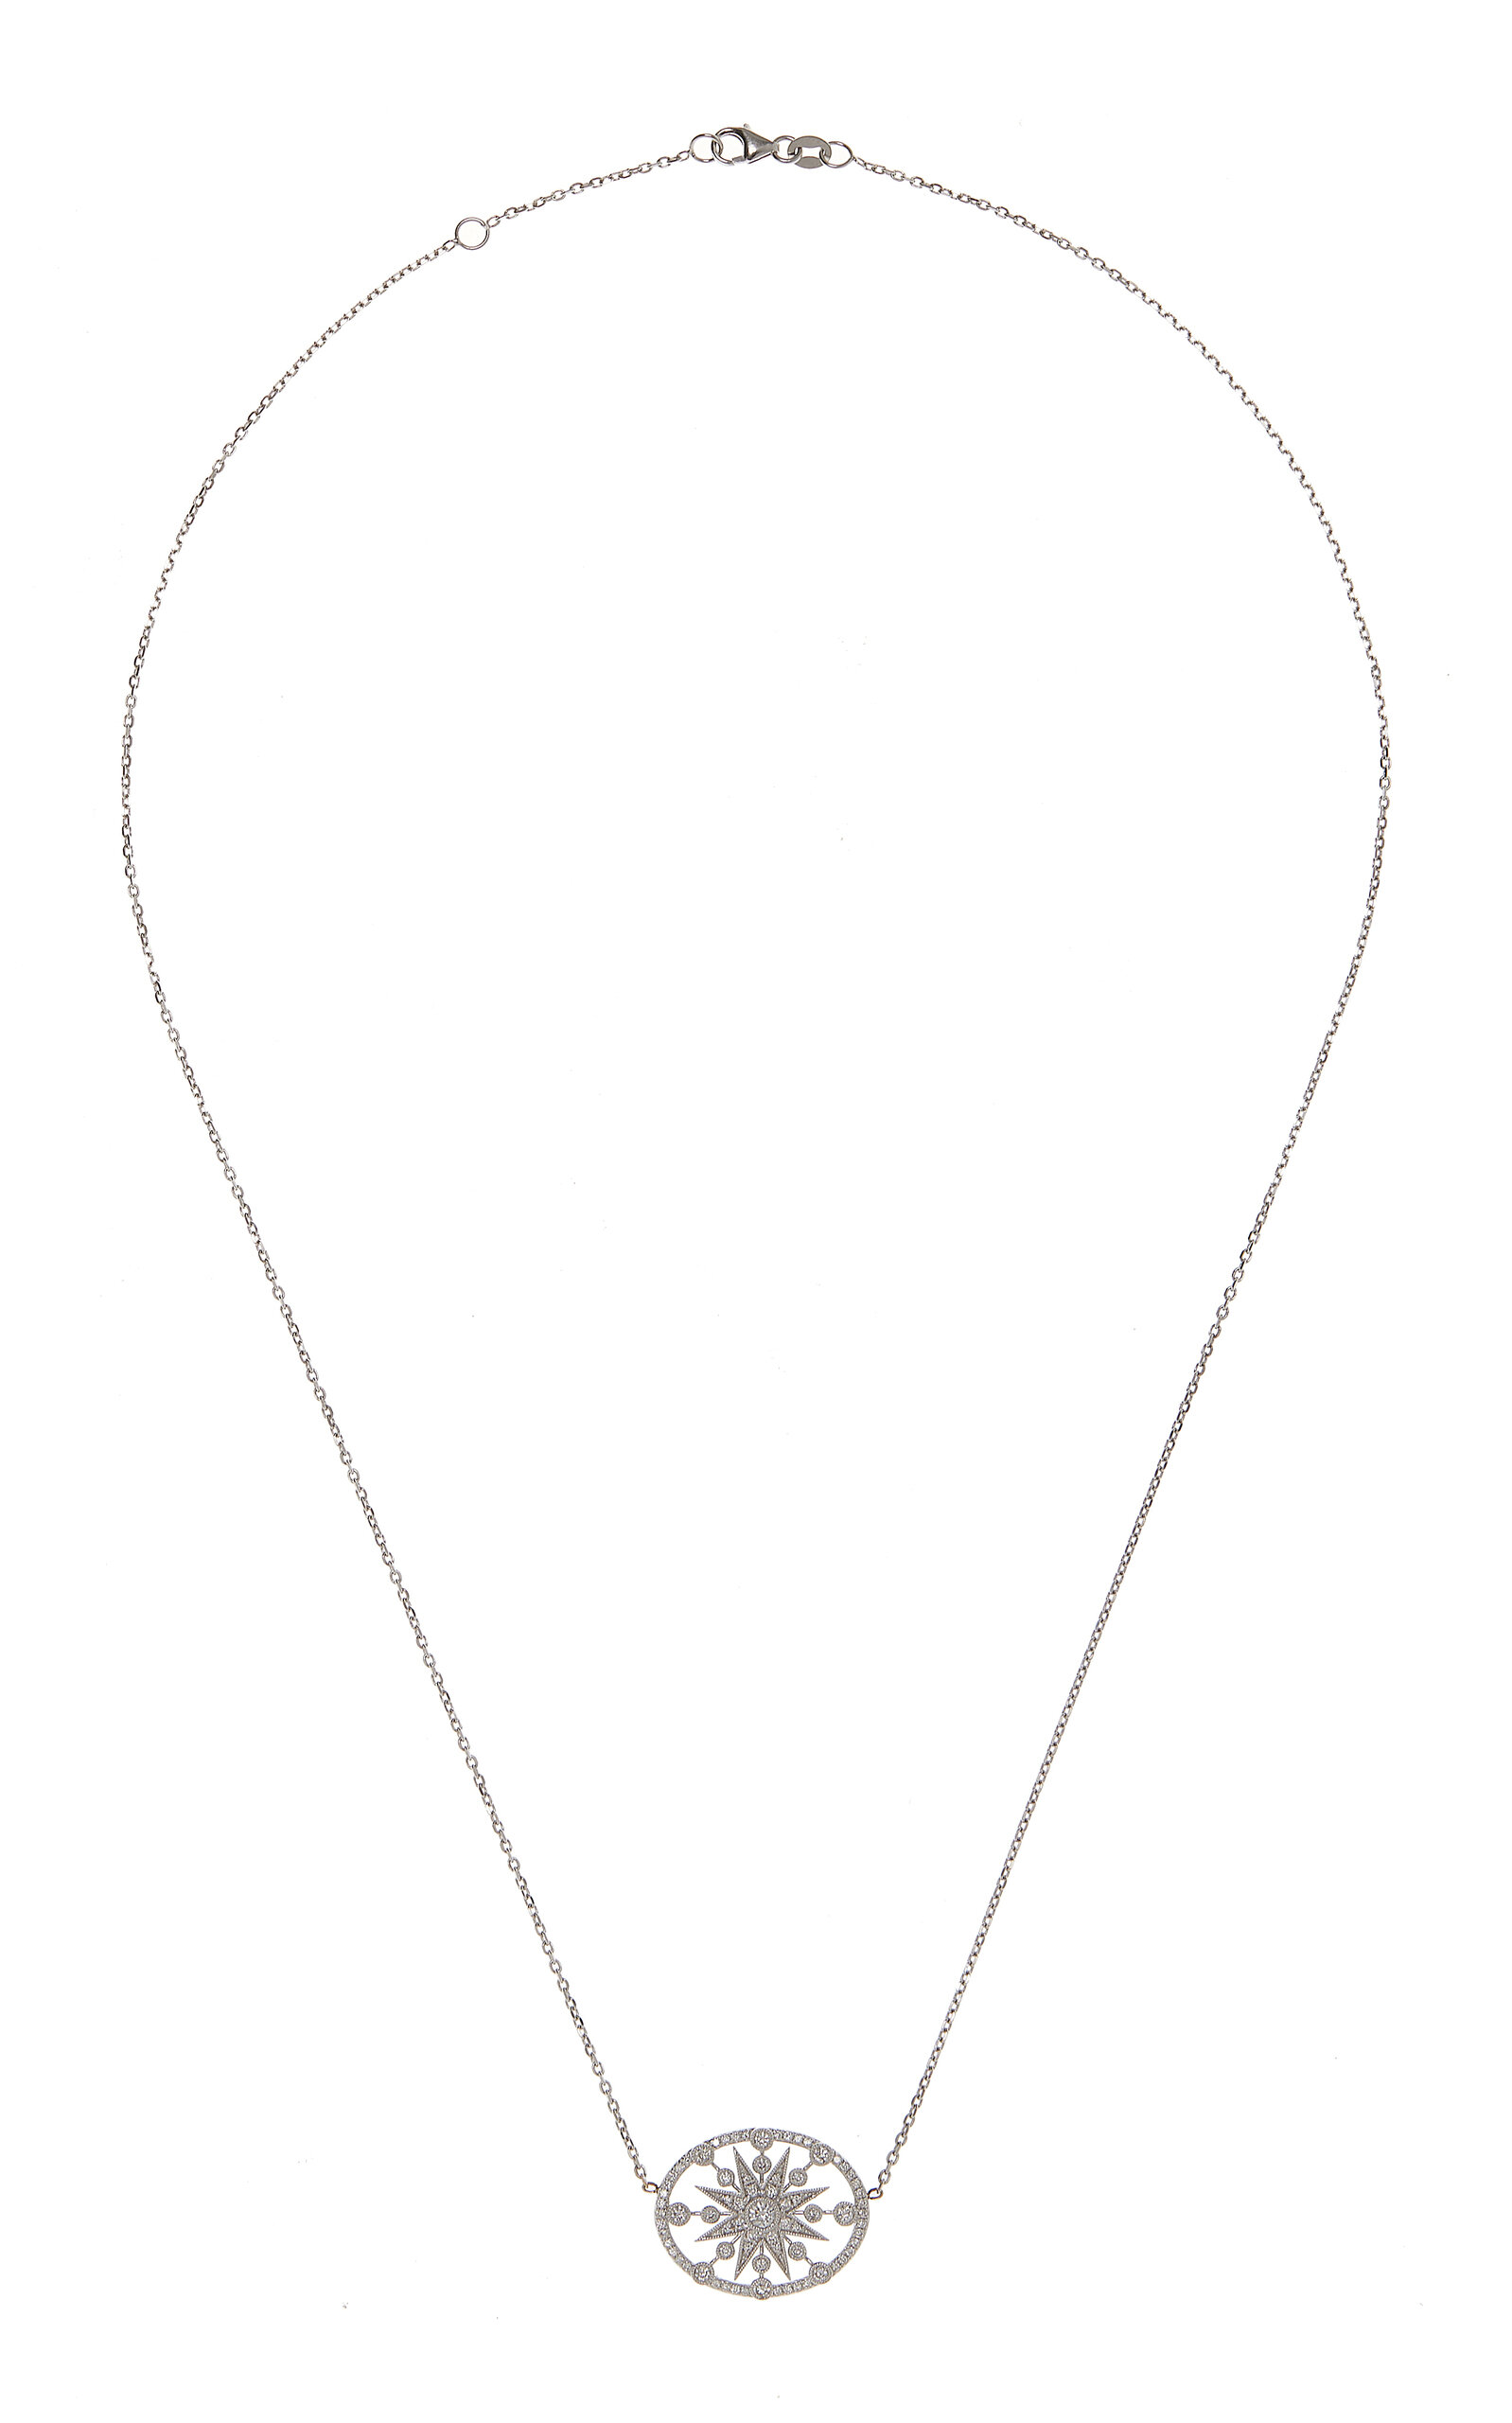 Colette Jewelry Shield 18k White Gold Diamond Necklace